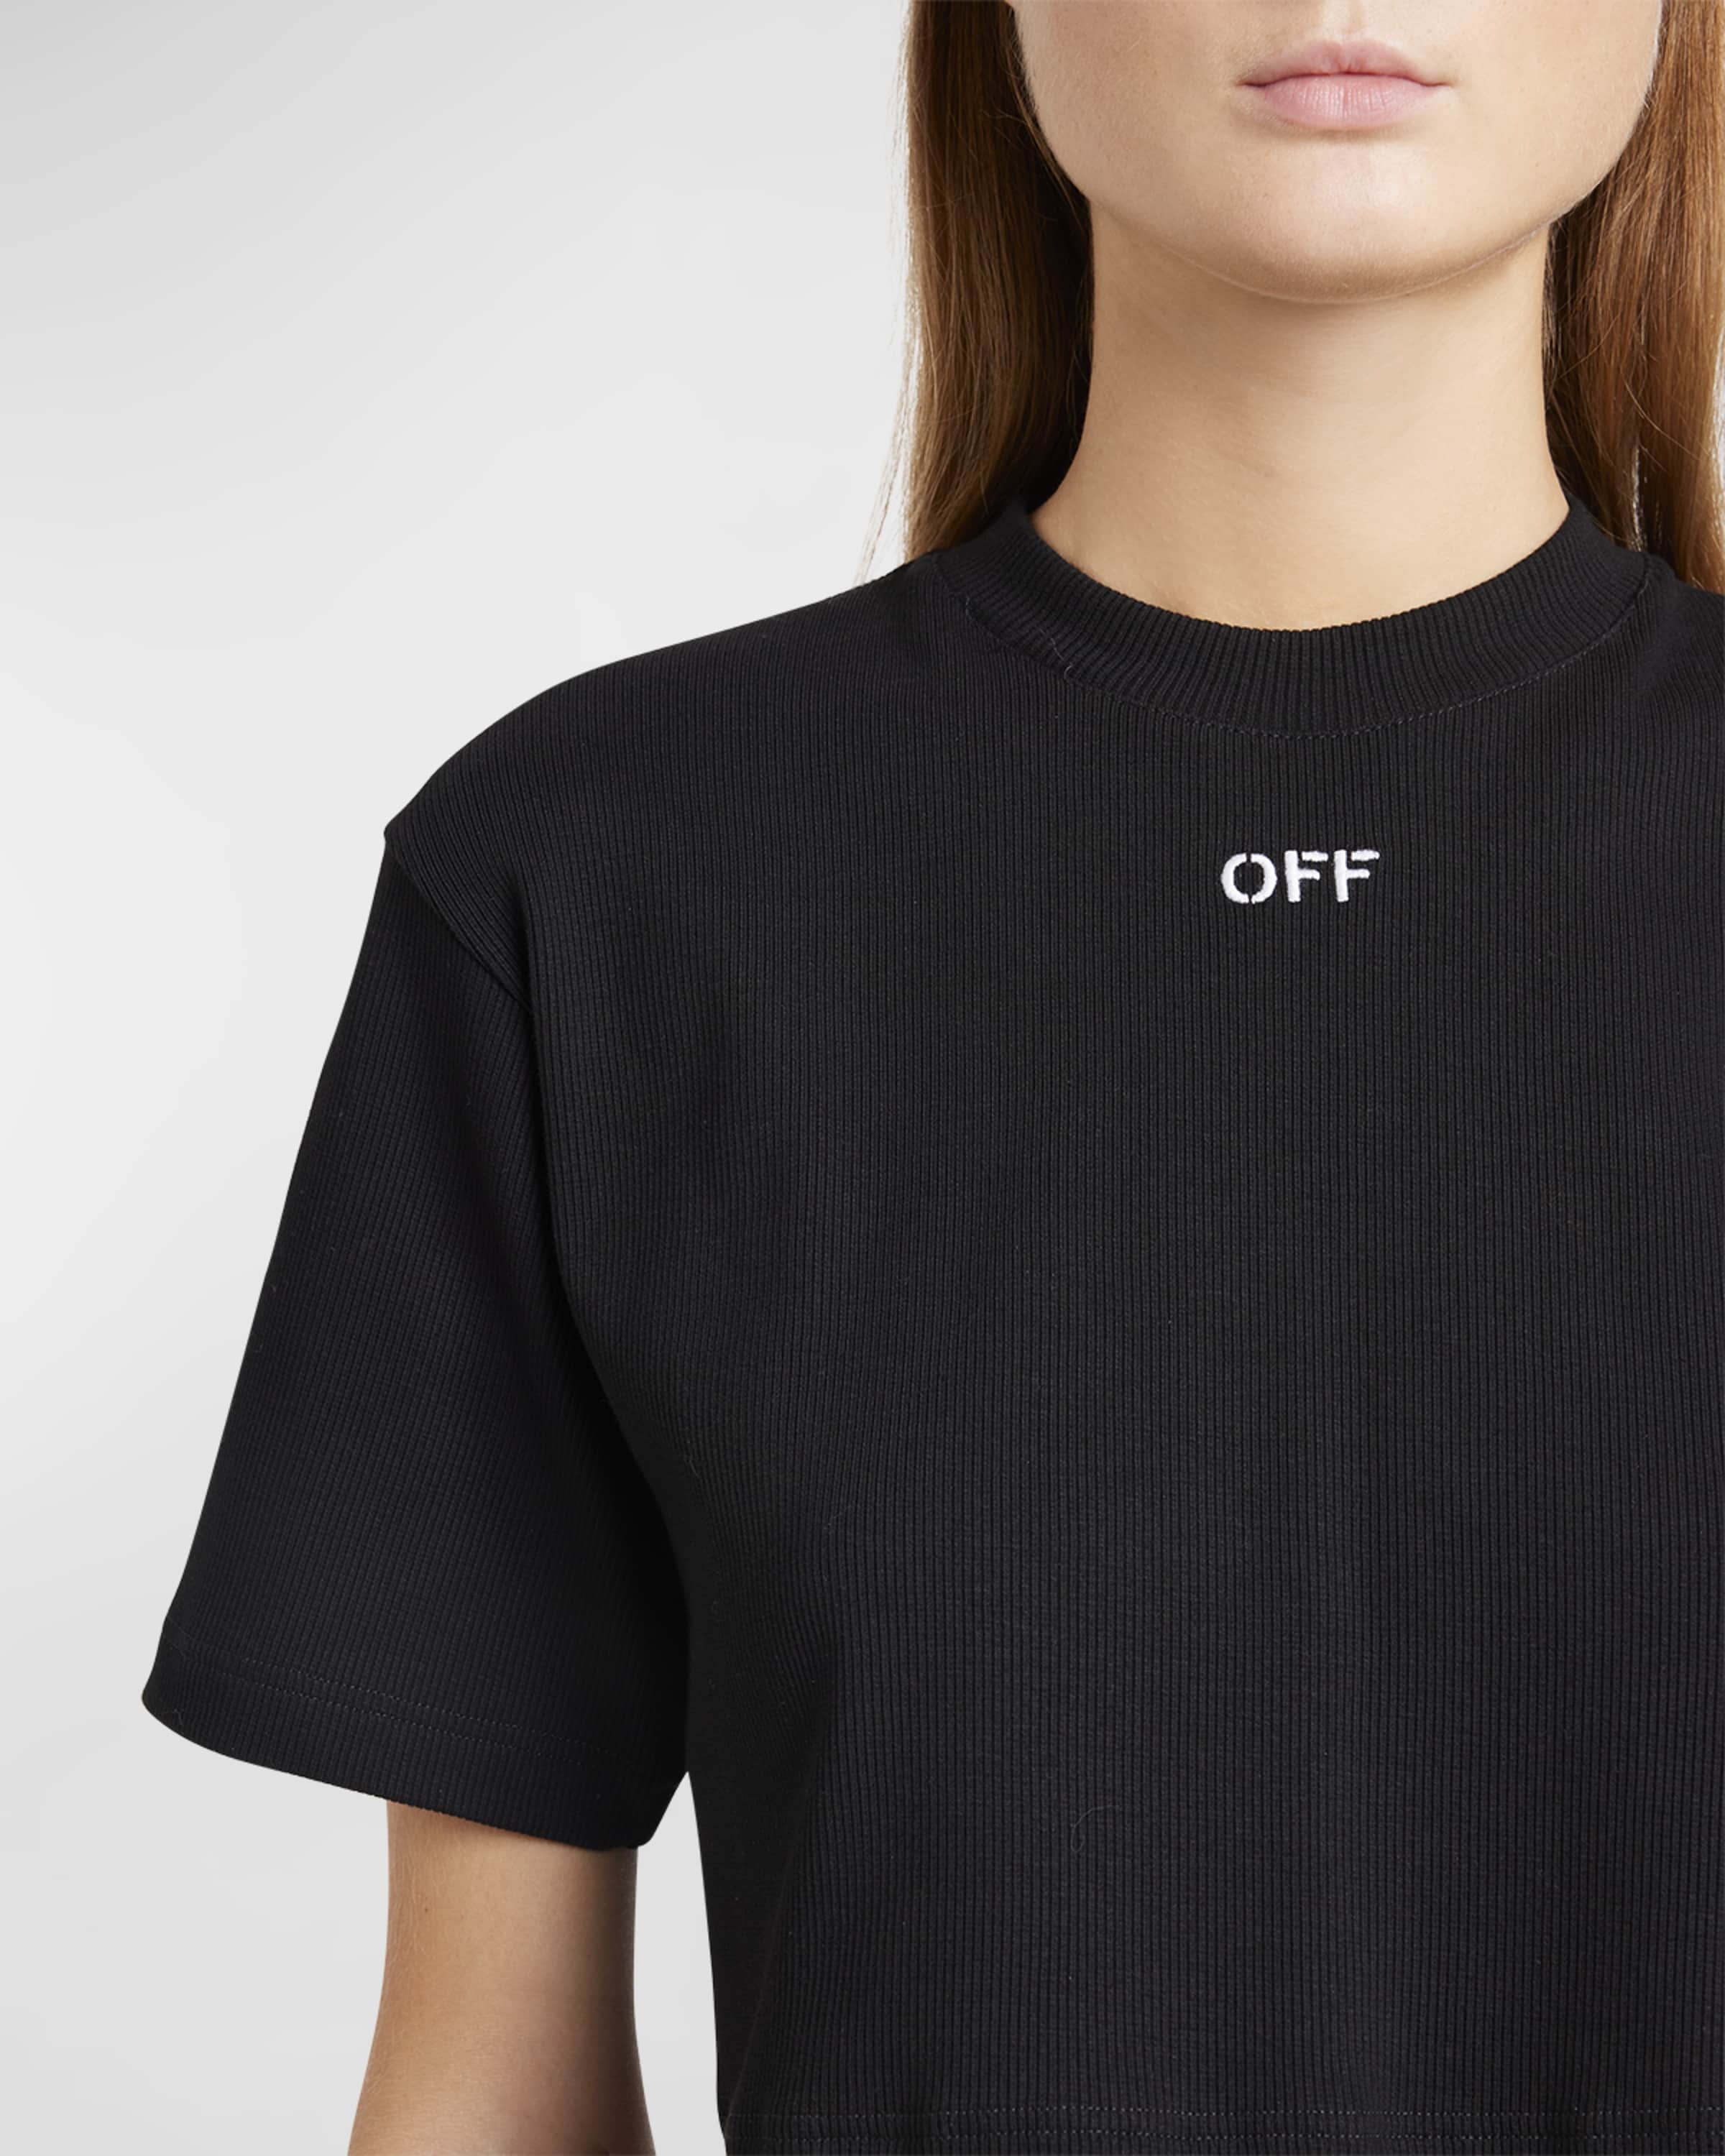 Off Stamp Rib Crop T-Shirt - 6